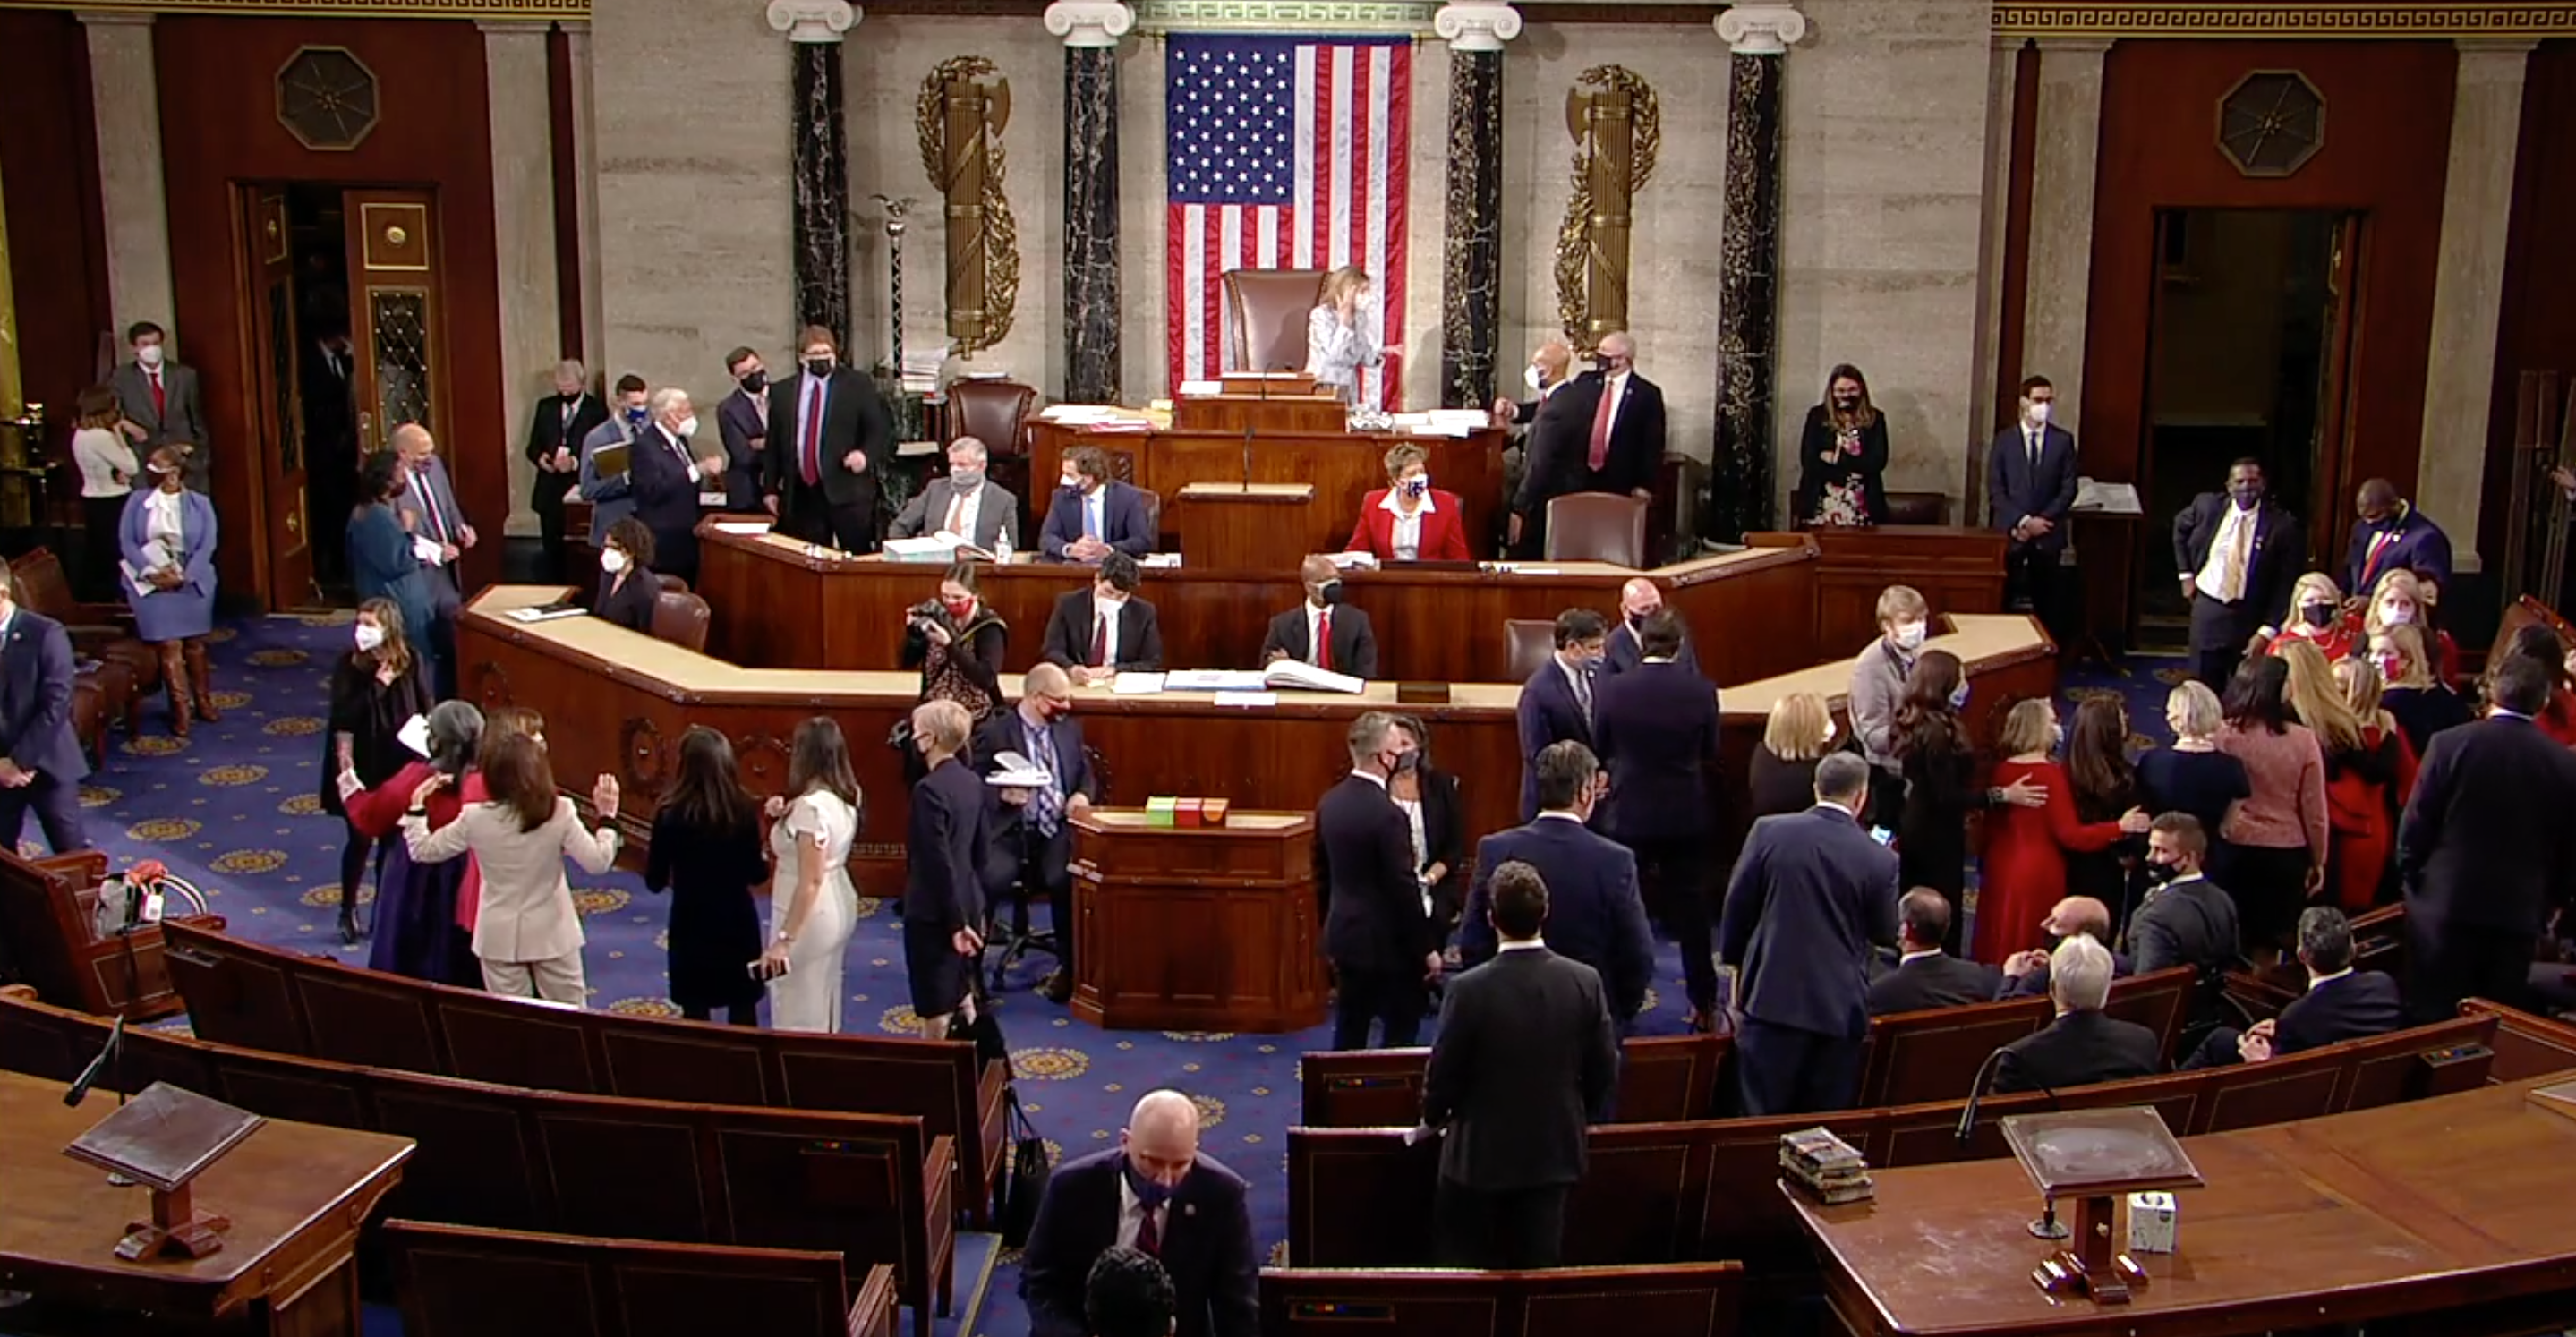 House legislators abandon social distance while Pelosi reads the oath to new members